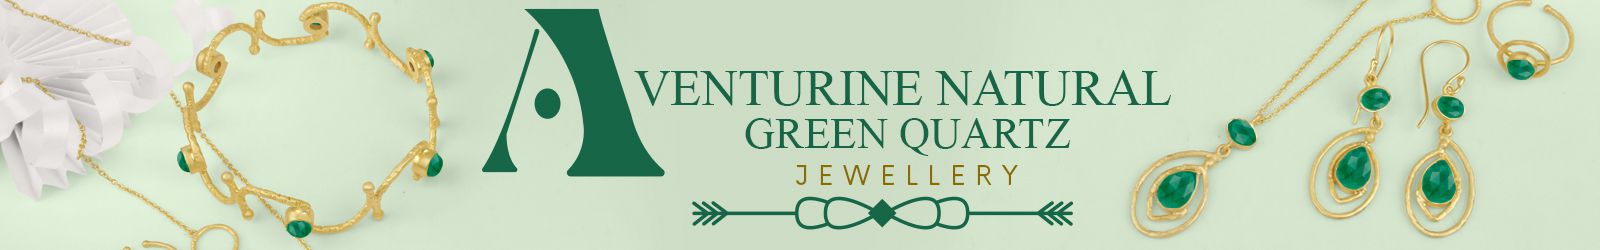 Silver Aventurine Natural Green Quartz Jewelry Wholesale Supplier